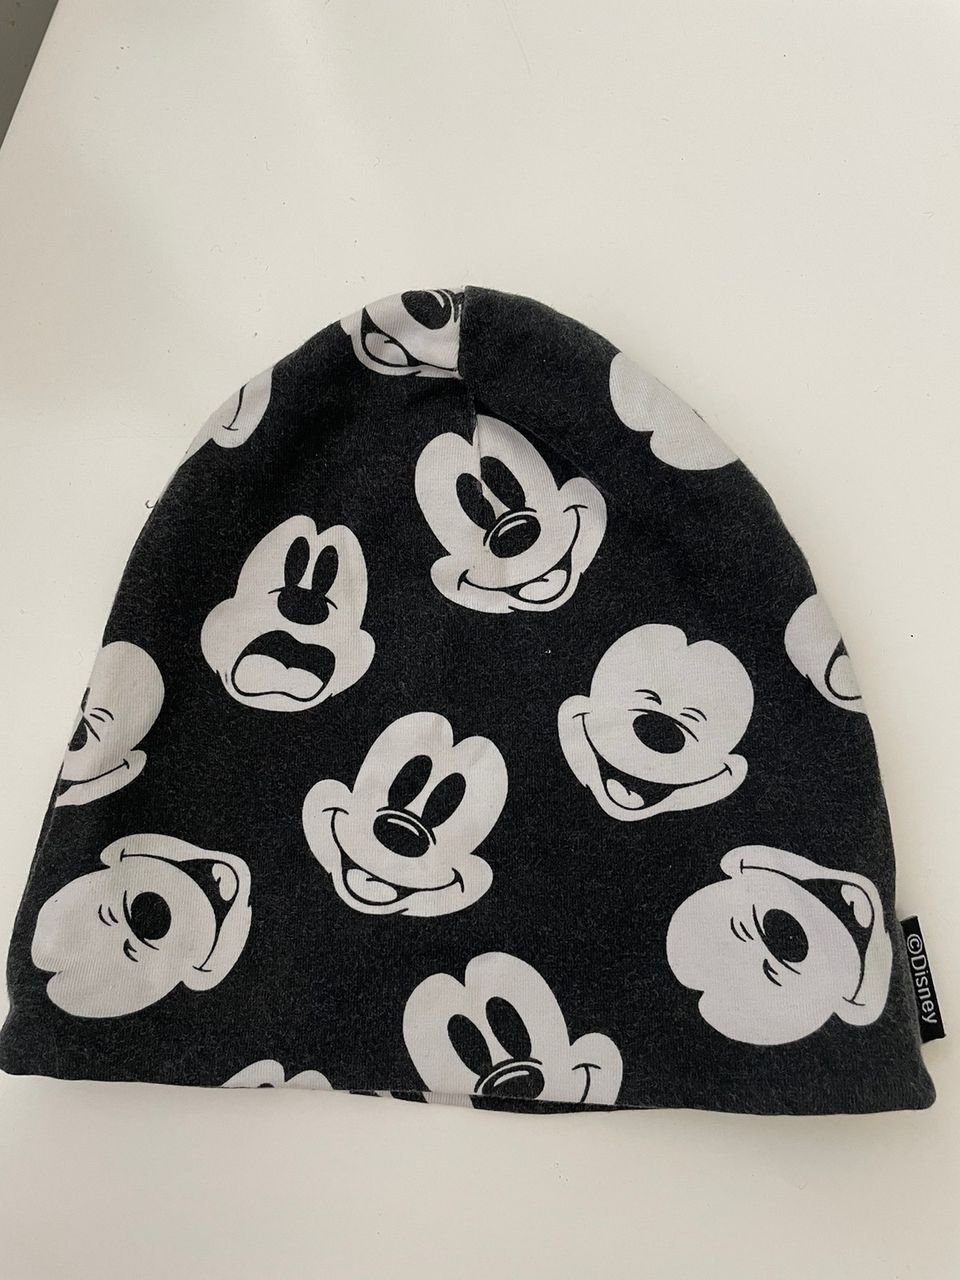 Mickey Mouse trikoopipo, koko 48/50